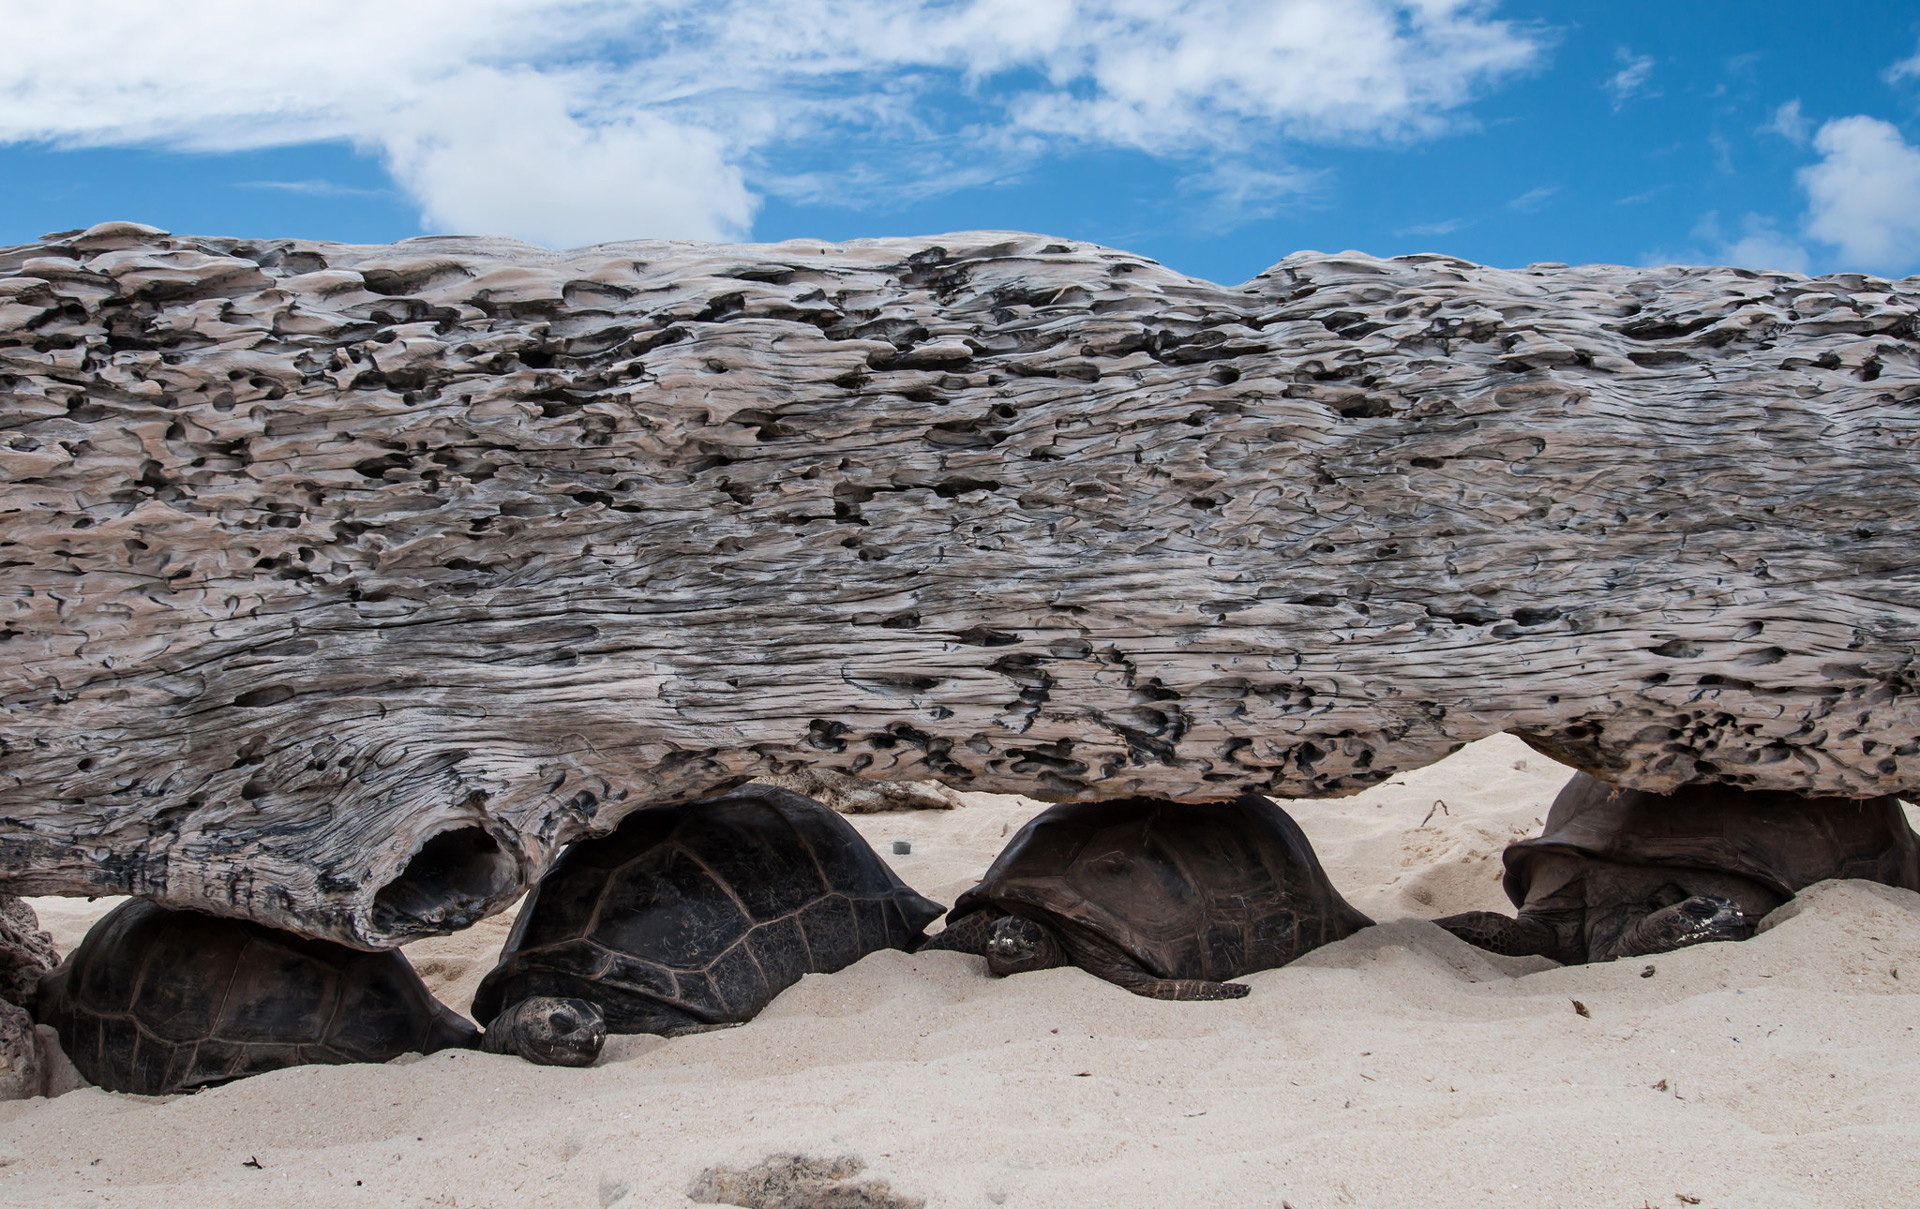 Tortoises lying under driftwood log on Aldabra, Seychelles